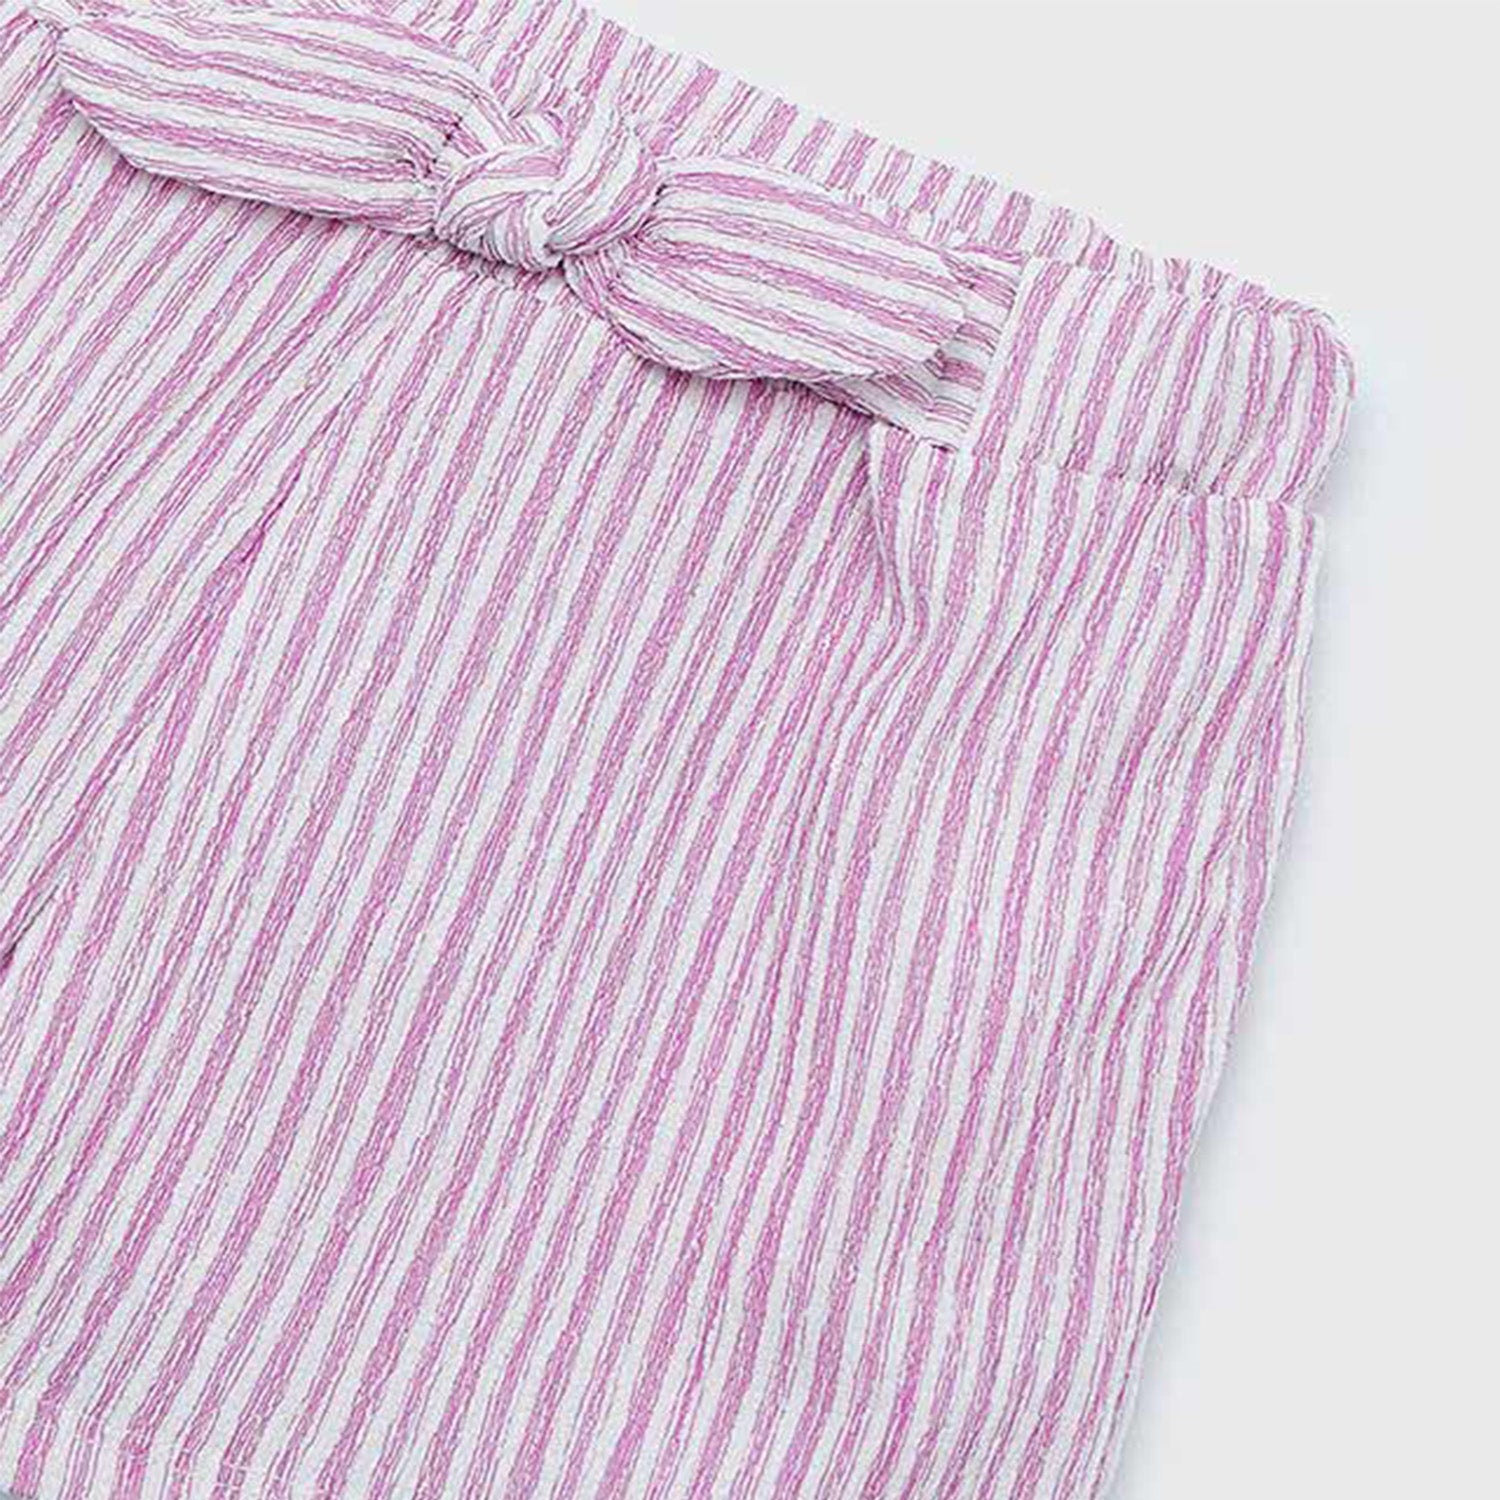 Pink Stripe Short Set